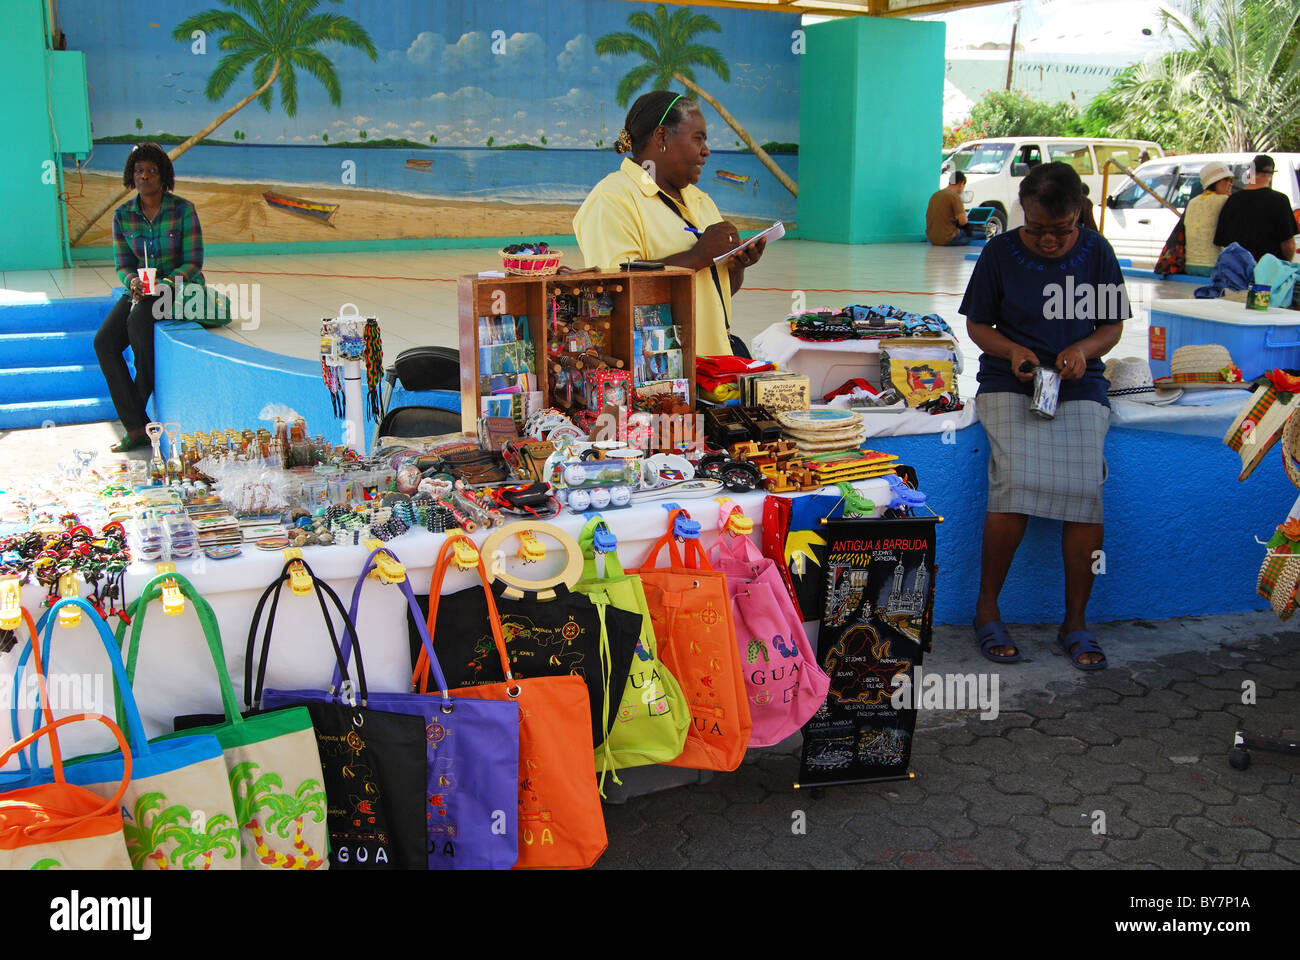 Street market stall selling clothes and souvenirs, St. John’s, Antigua, Leeward Islands, Caribbean. Stock Photo